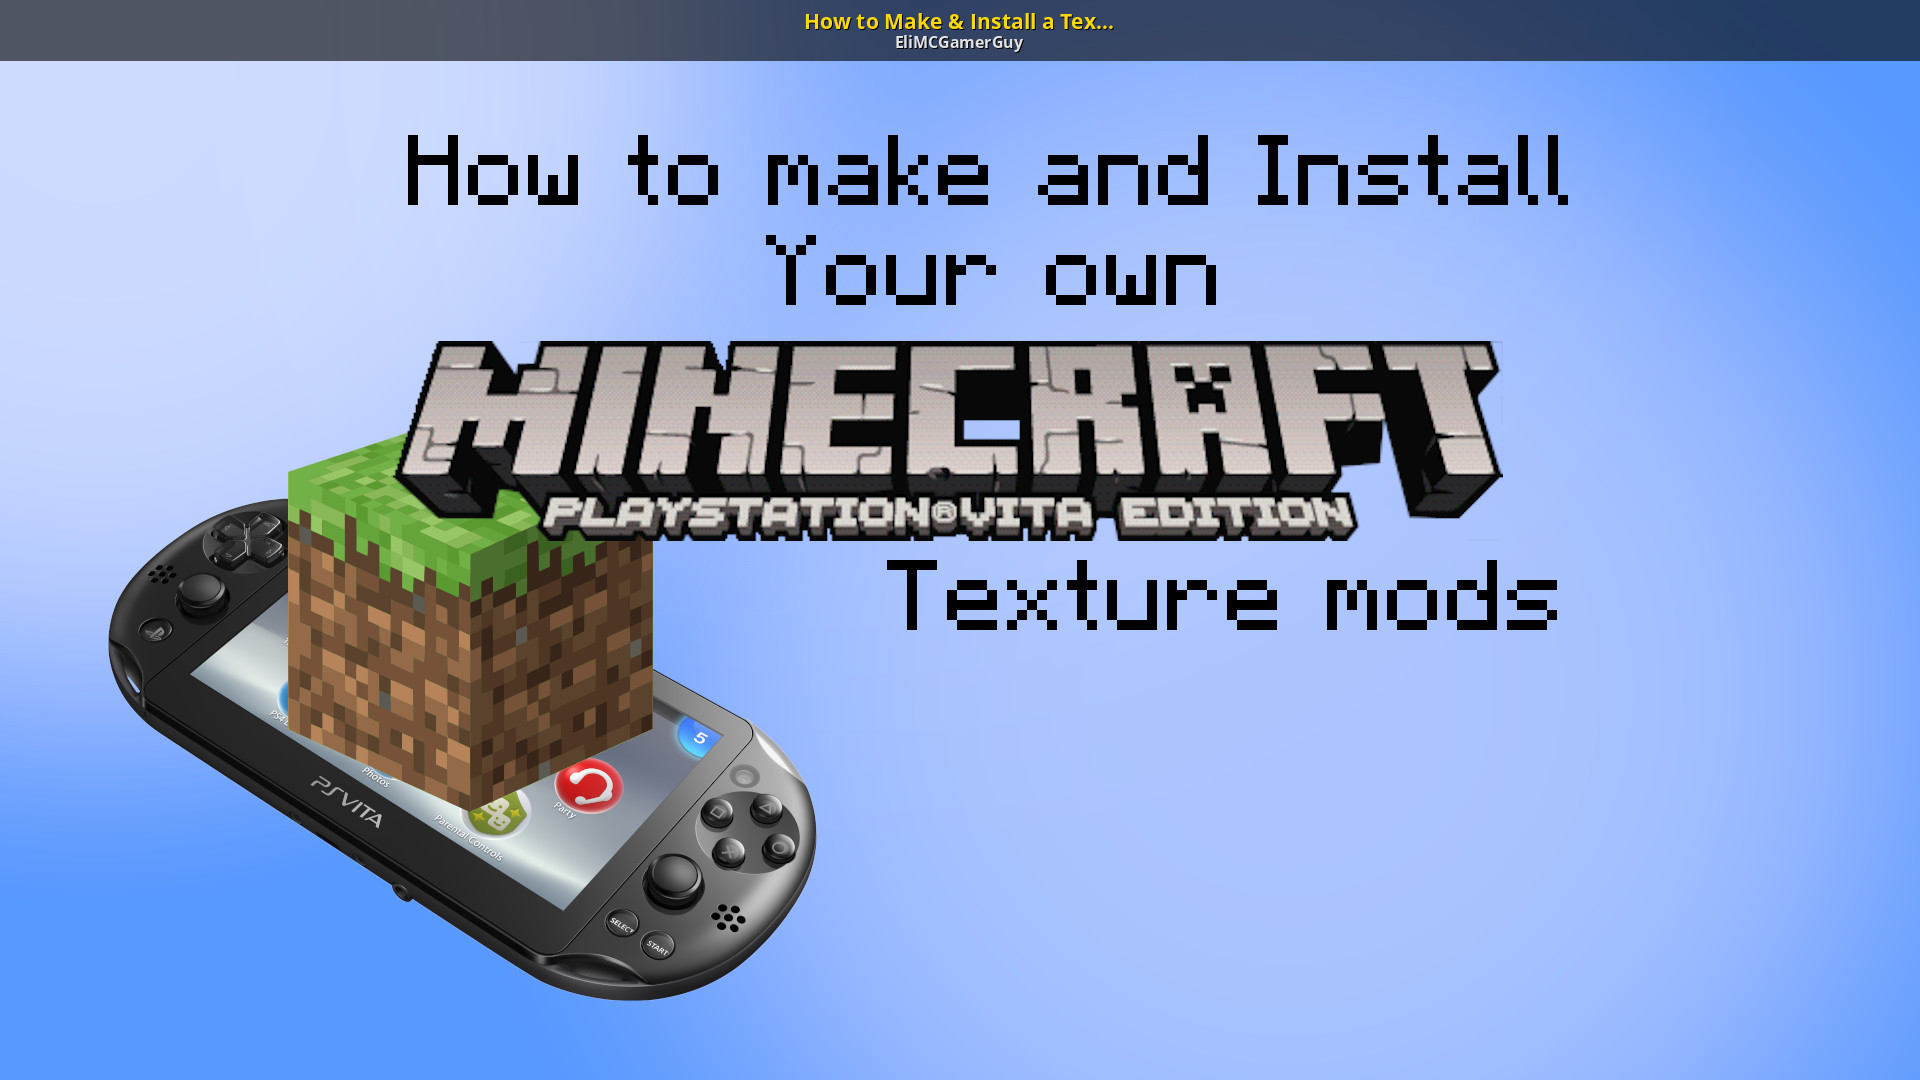 How To Make Install A Texture Mod Minecraft Ps Vita Edition Tutorials